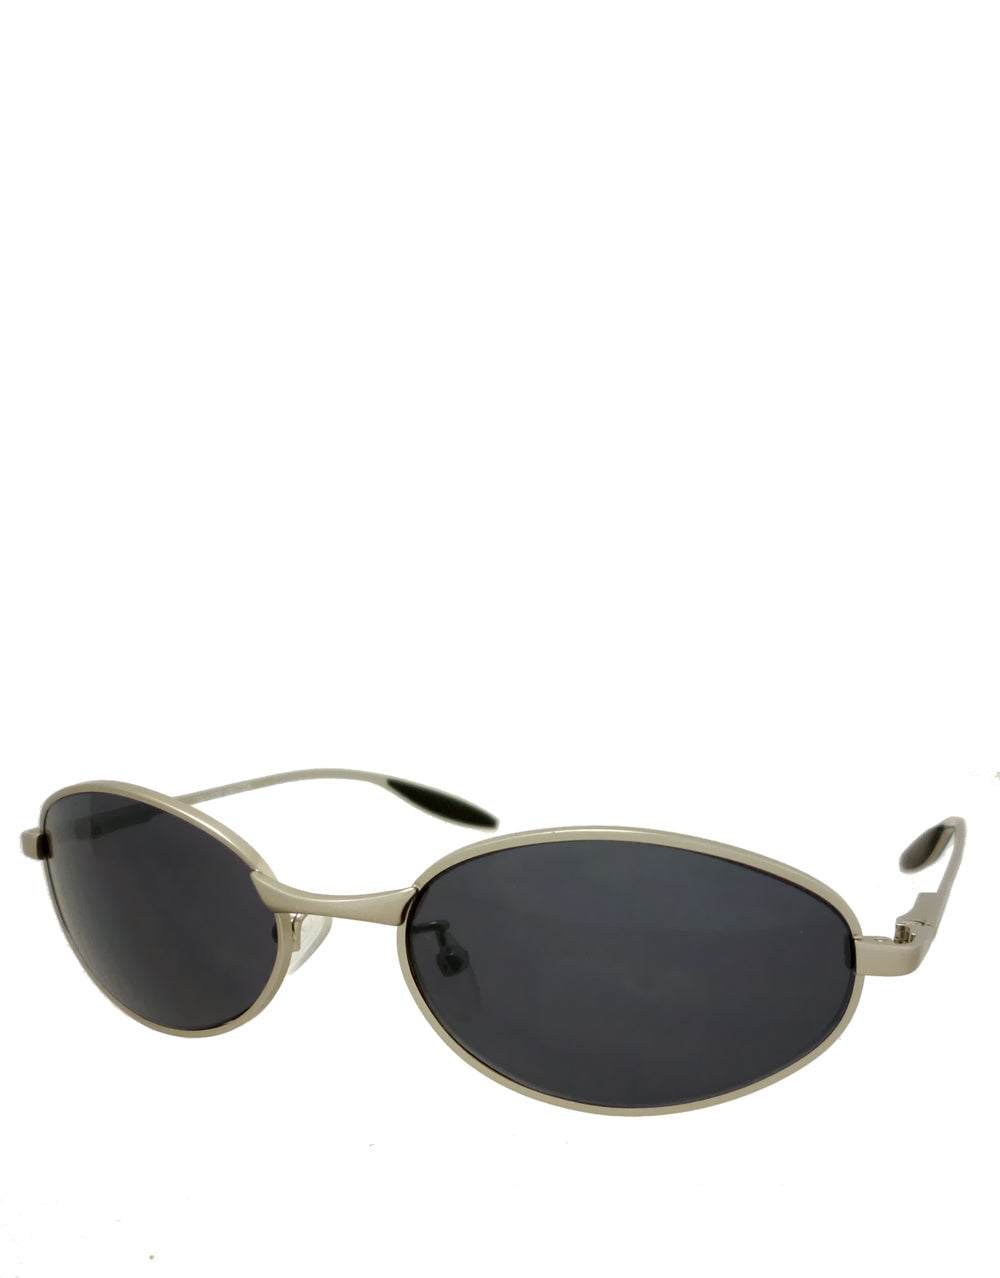 Eraser Style Oval Sunglasses